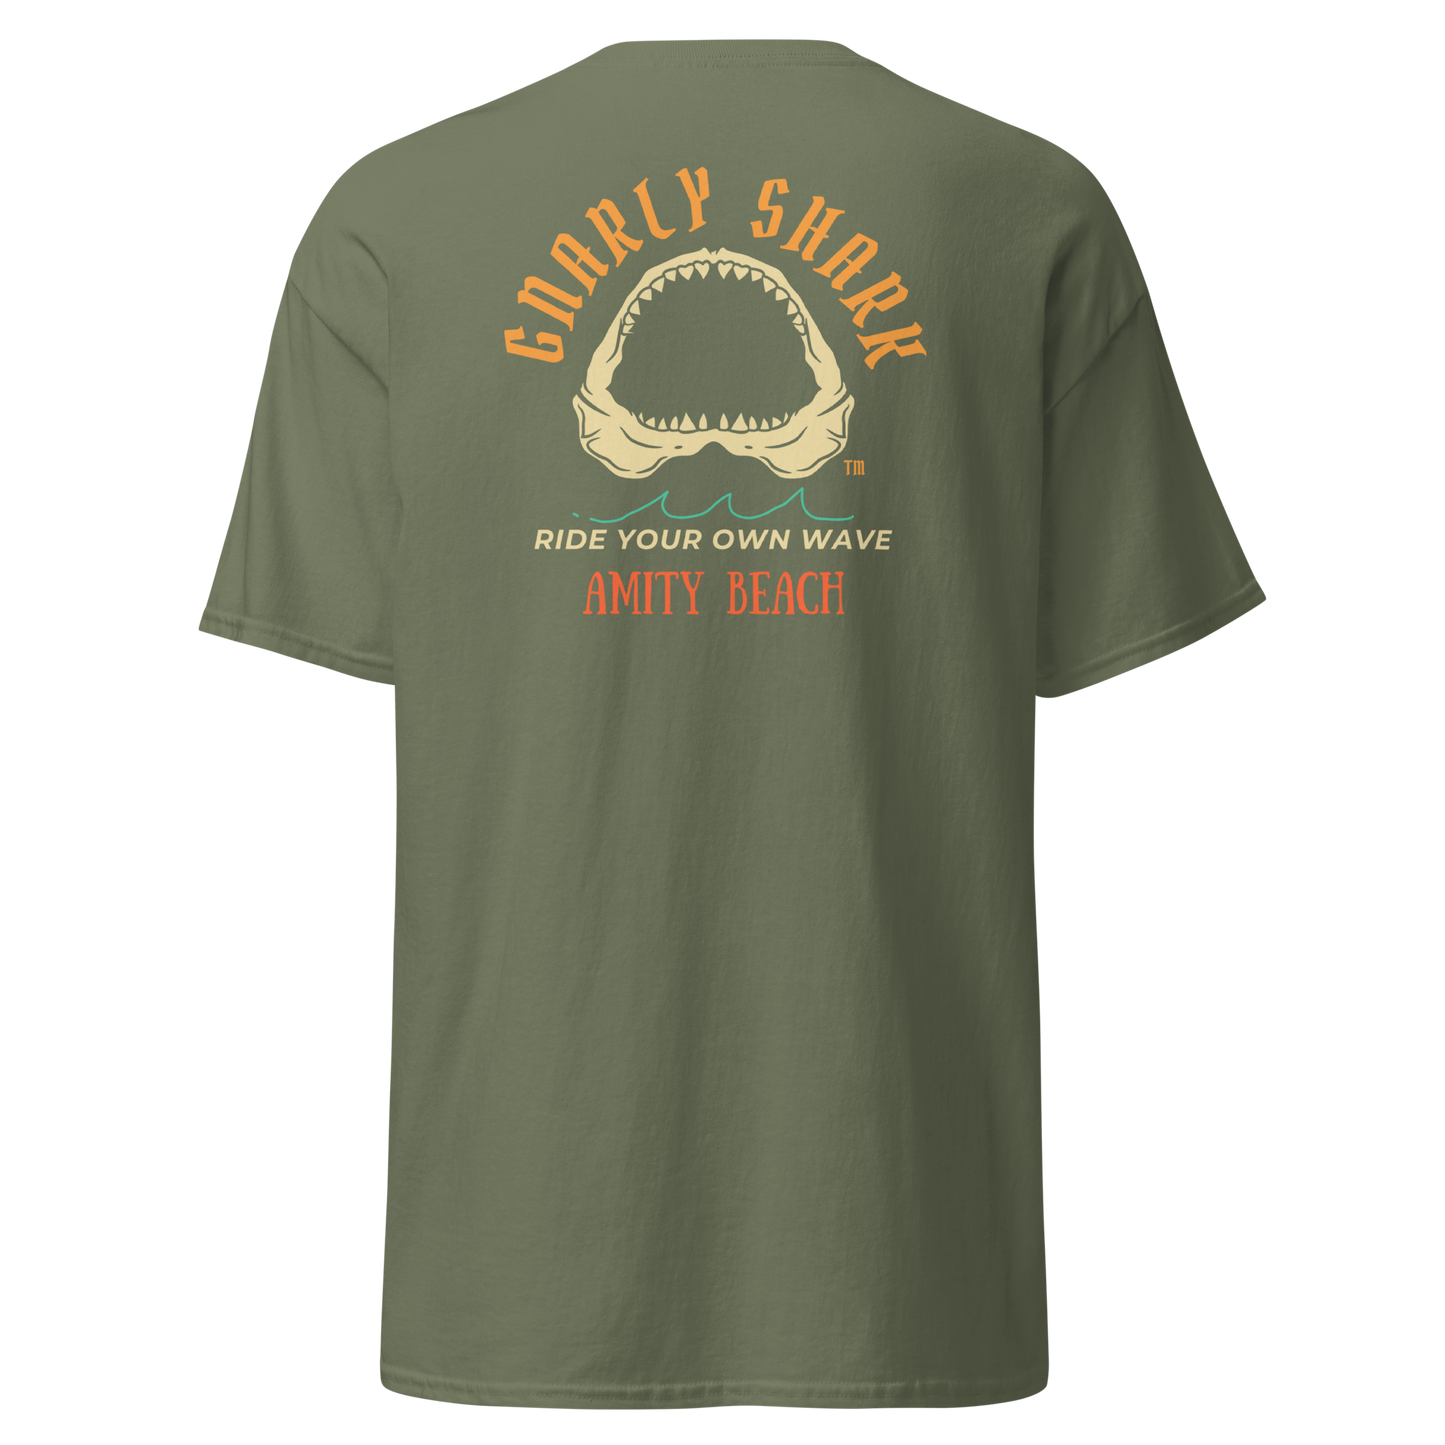 Gnarly Shark Amity Beach T- shirt - Front / Back - Gildan classic 5000